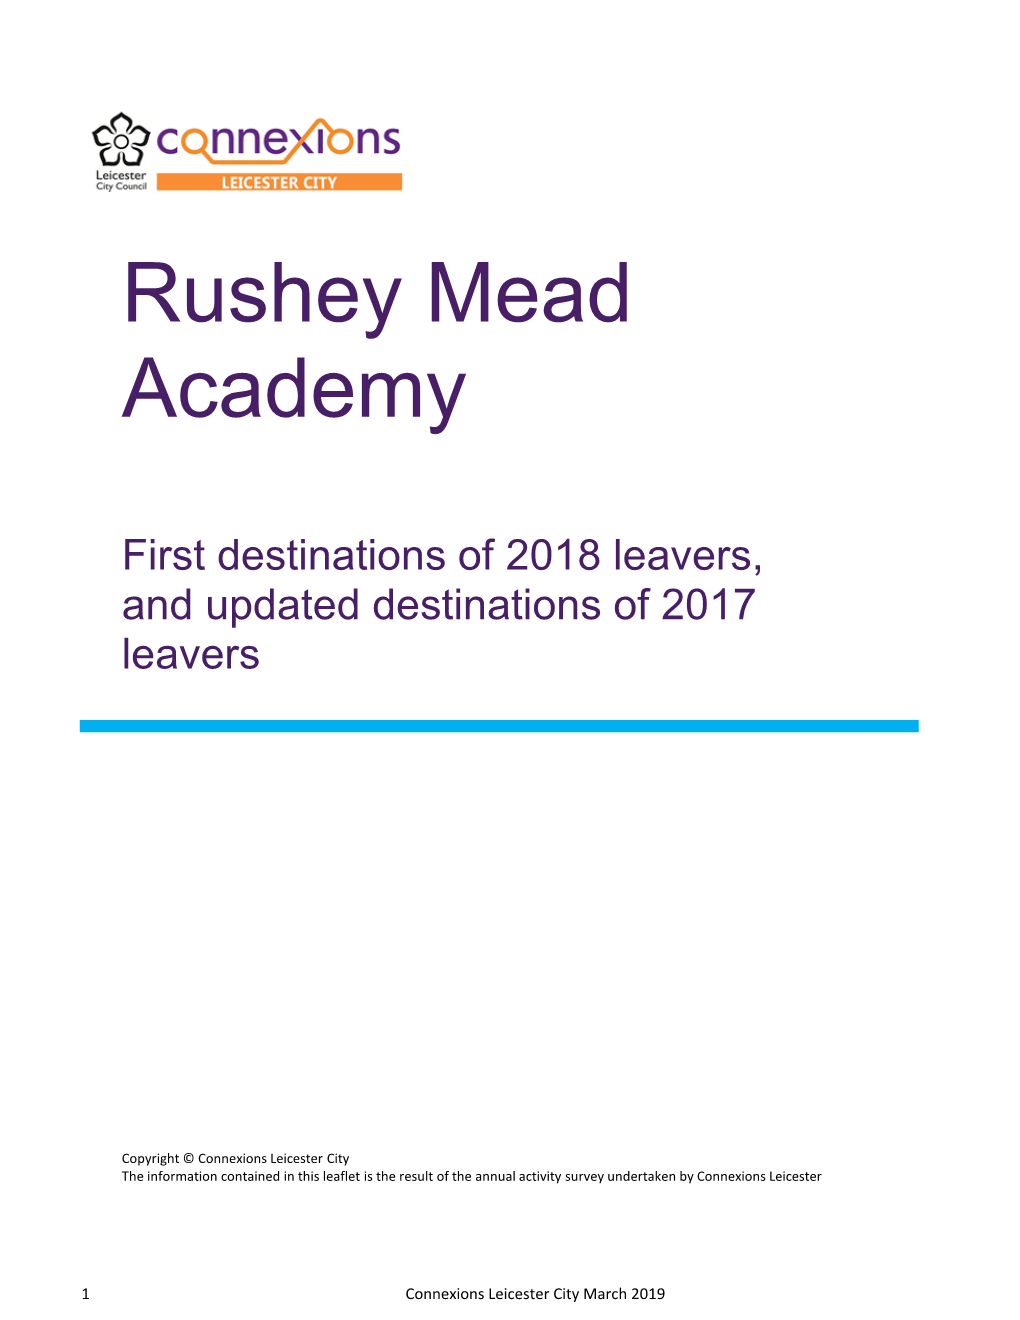 Rushey Mead Academy Destinations 2018